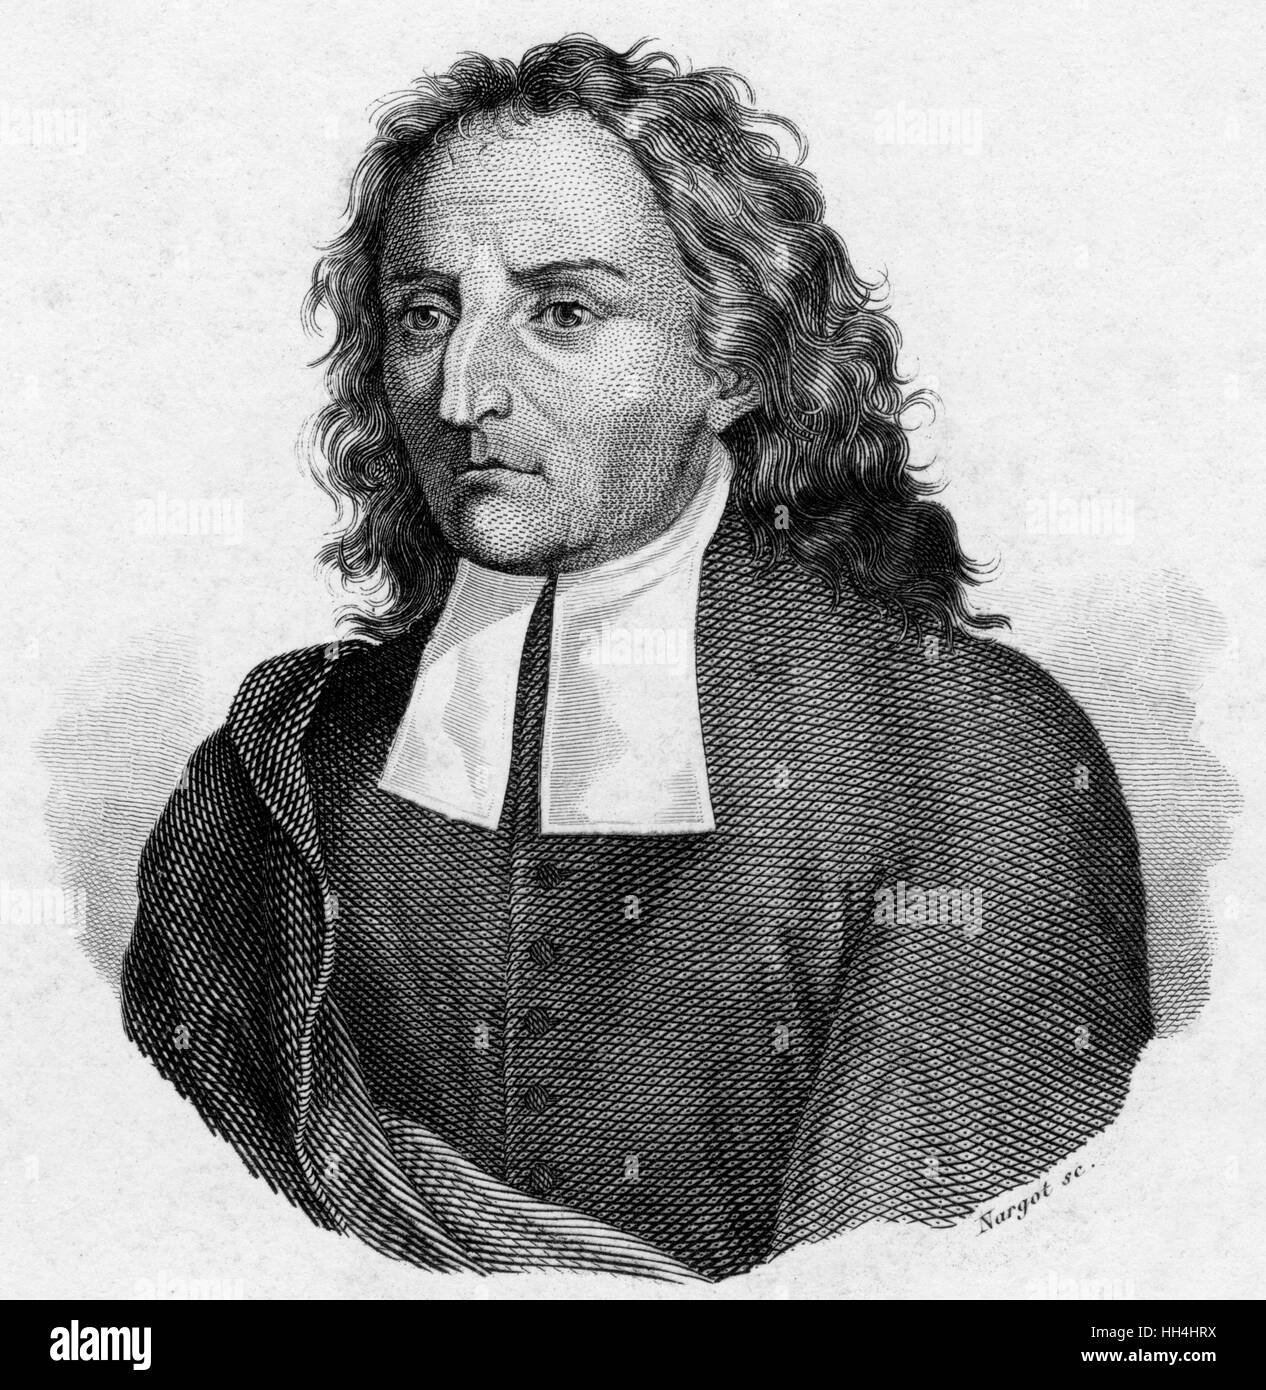 Giovanni Battista Vico (1668-1744) - Italian Philosopher and Professor in Naples, Italy. Stock Photo